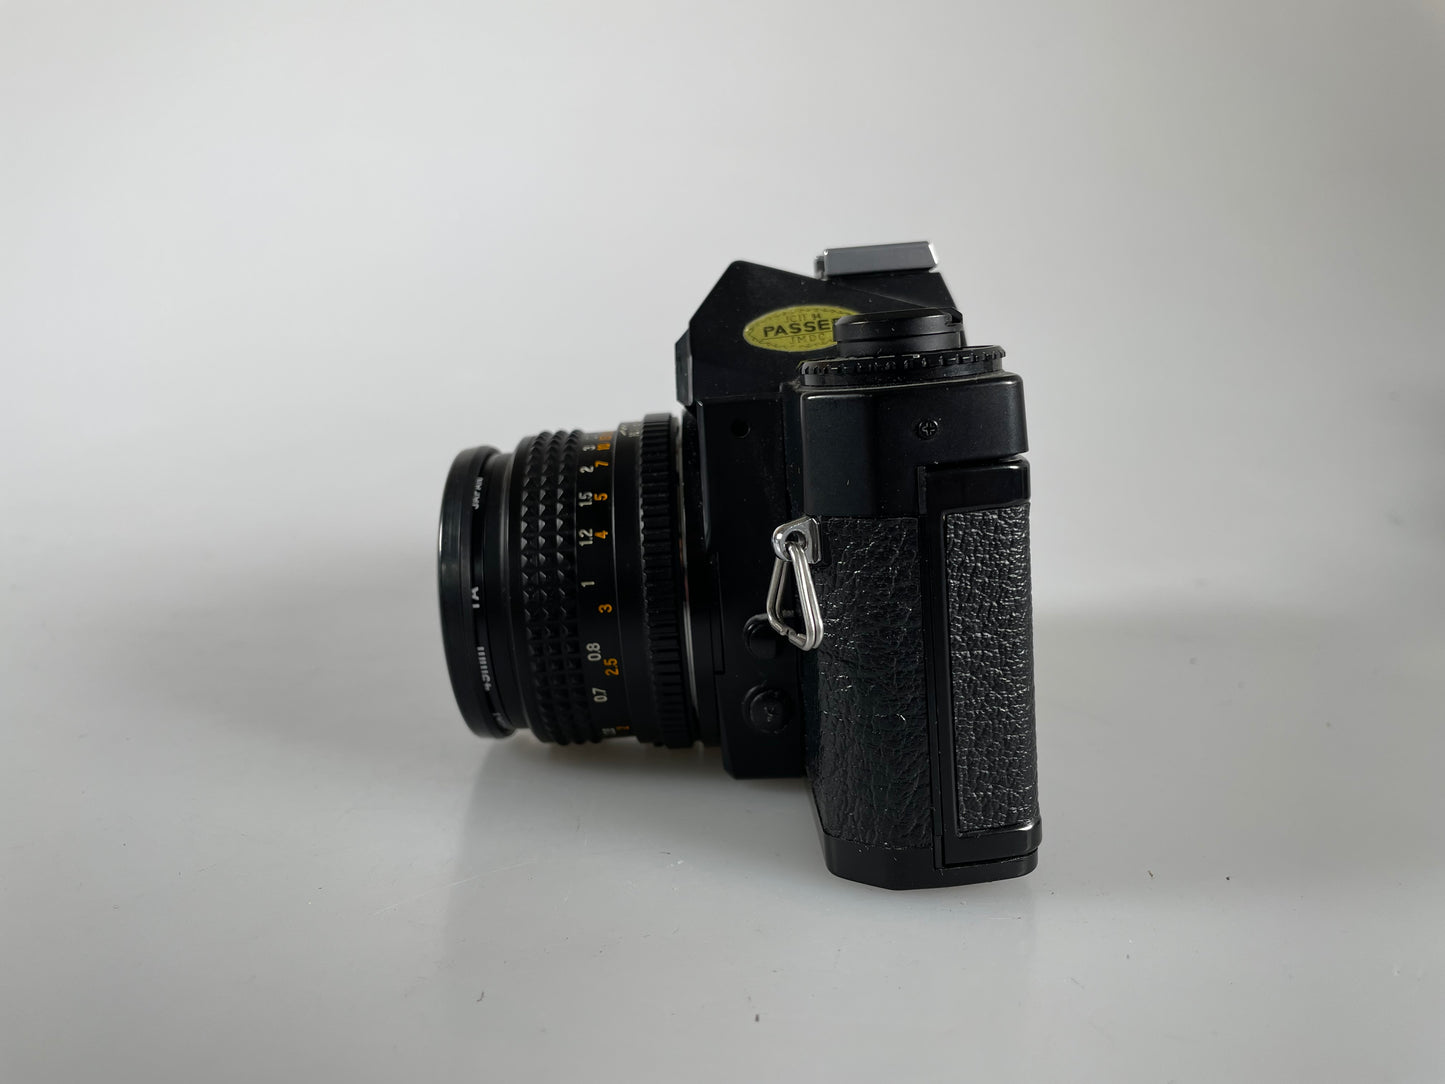 Mamiya ZE Camera with Sekor 50mm f1.7 EF lens kit